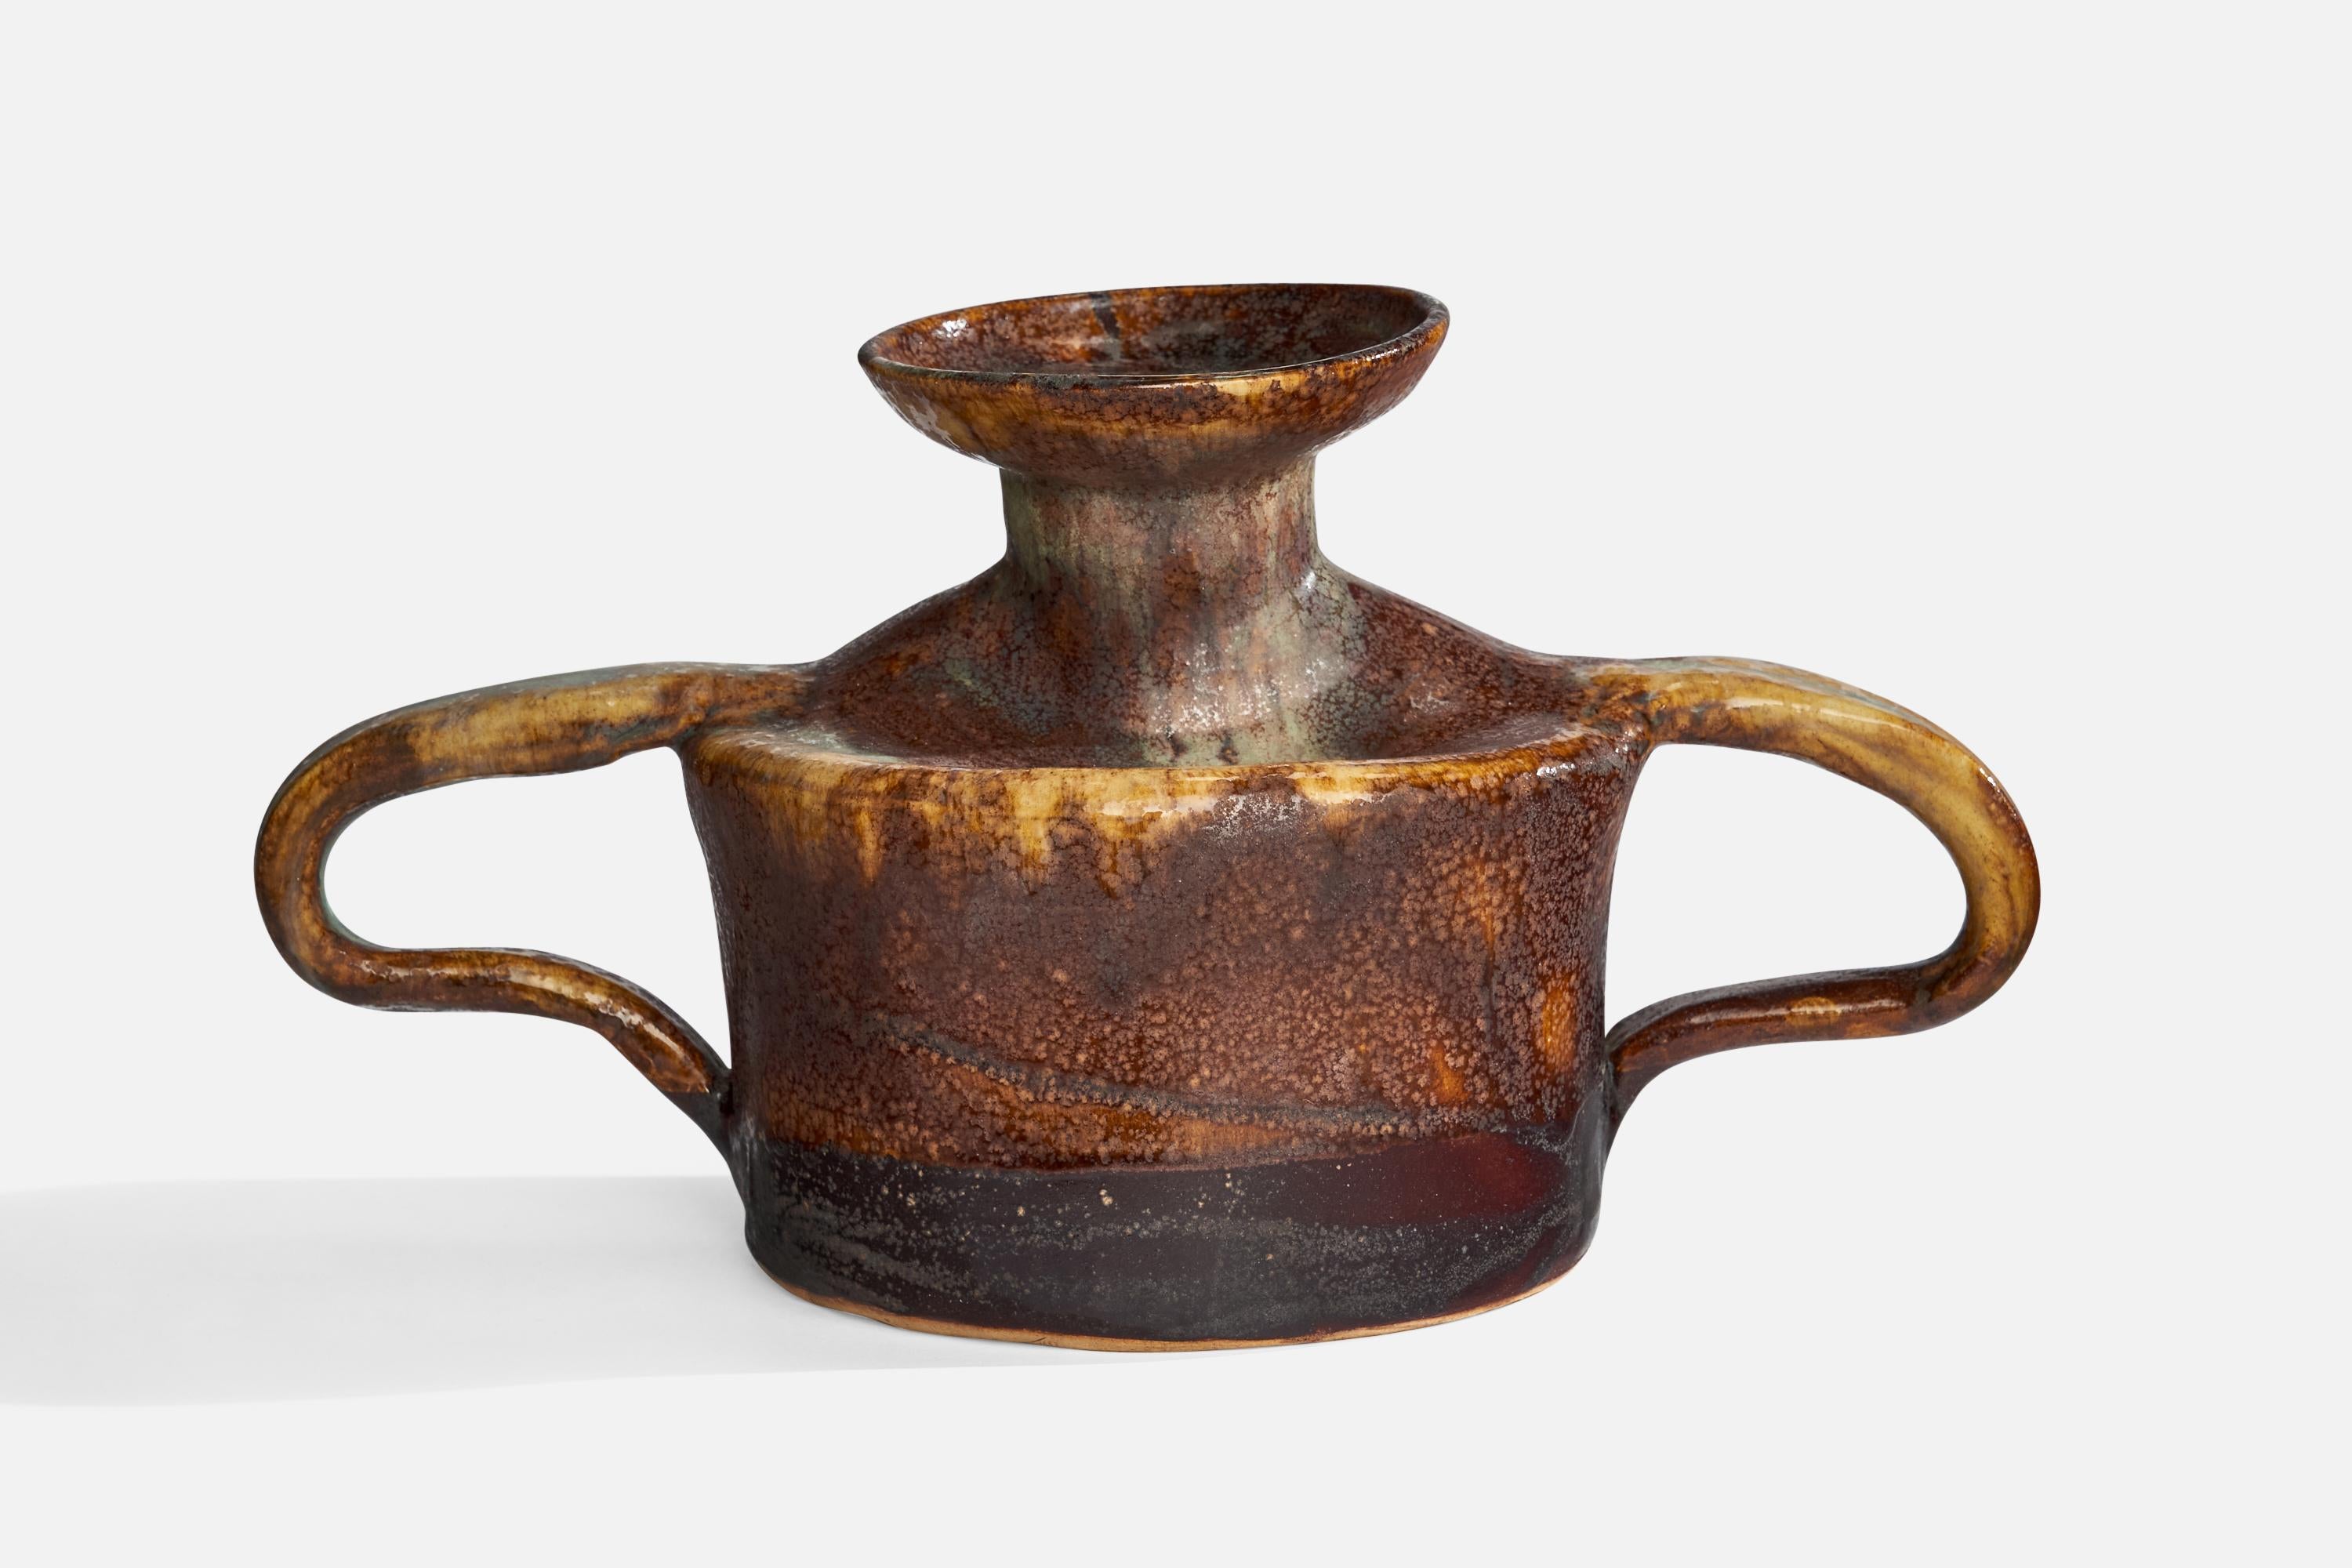 A brown-glazed ceramic vase designed and produced in Sweden, c. 1930s.